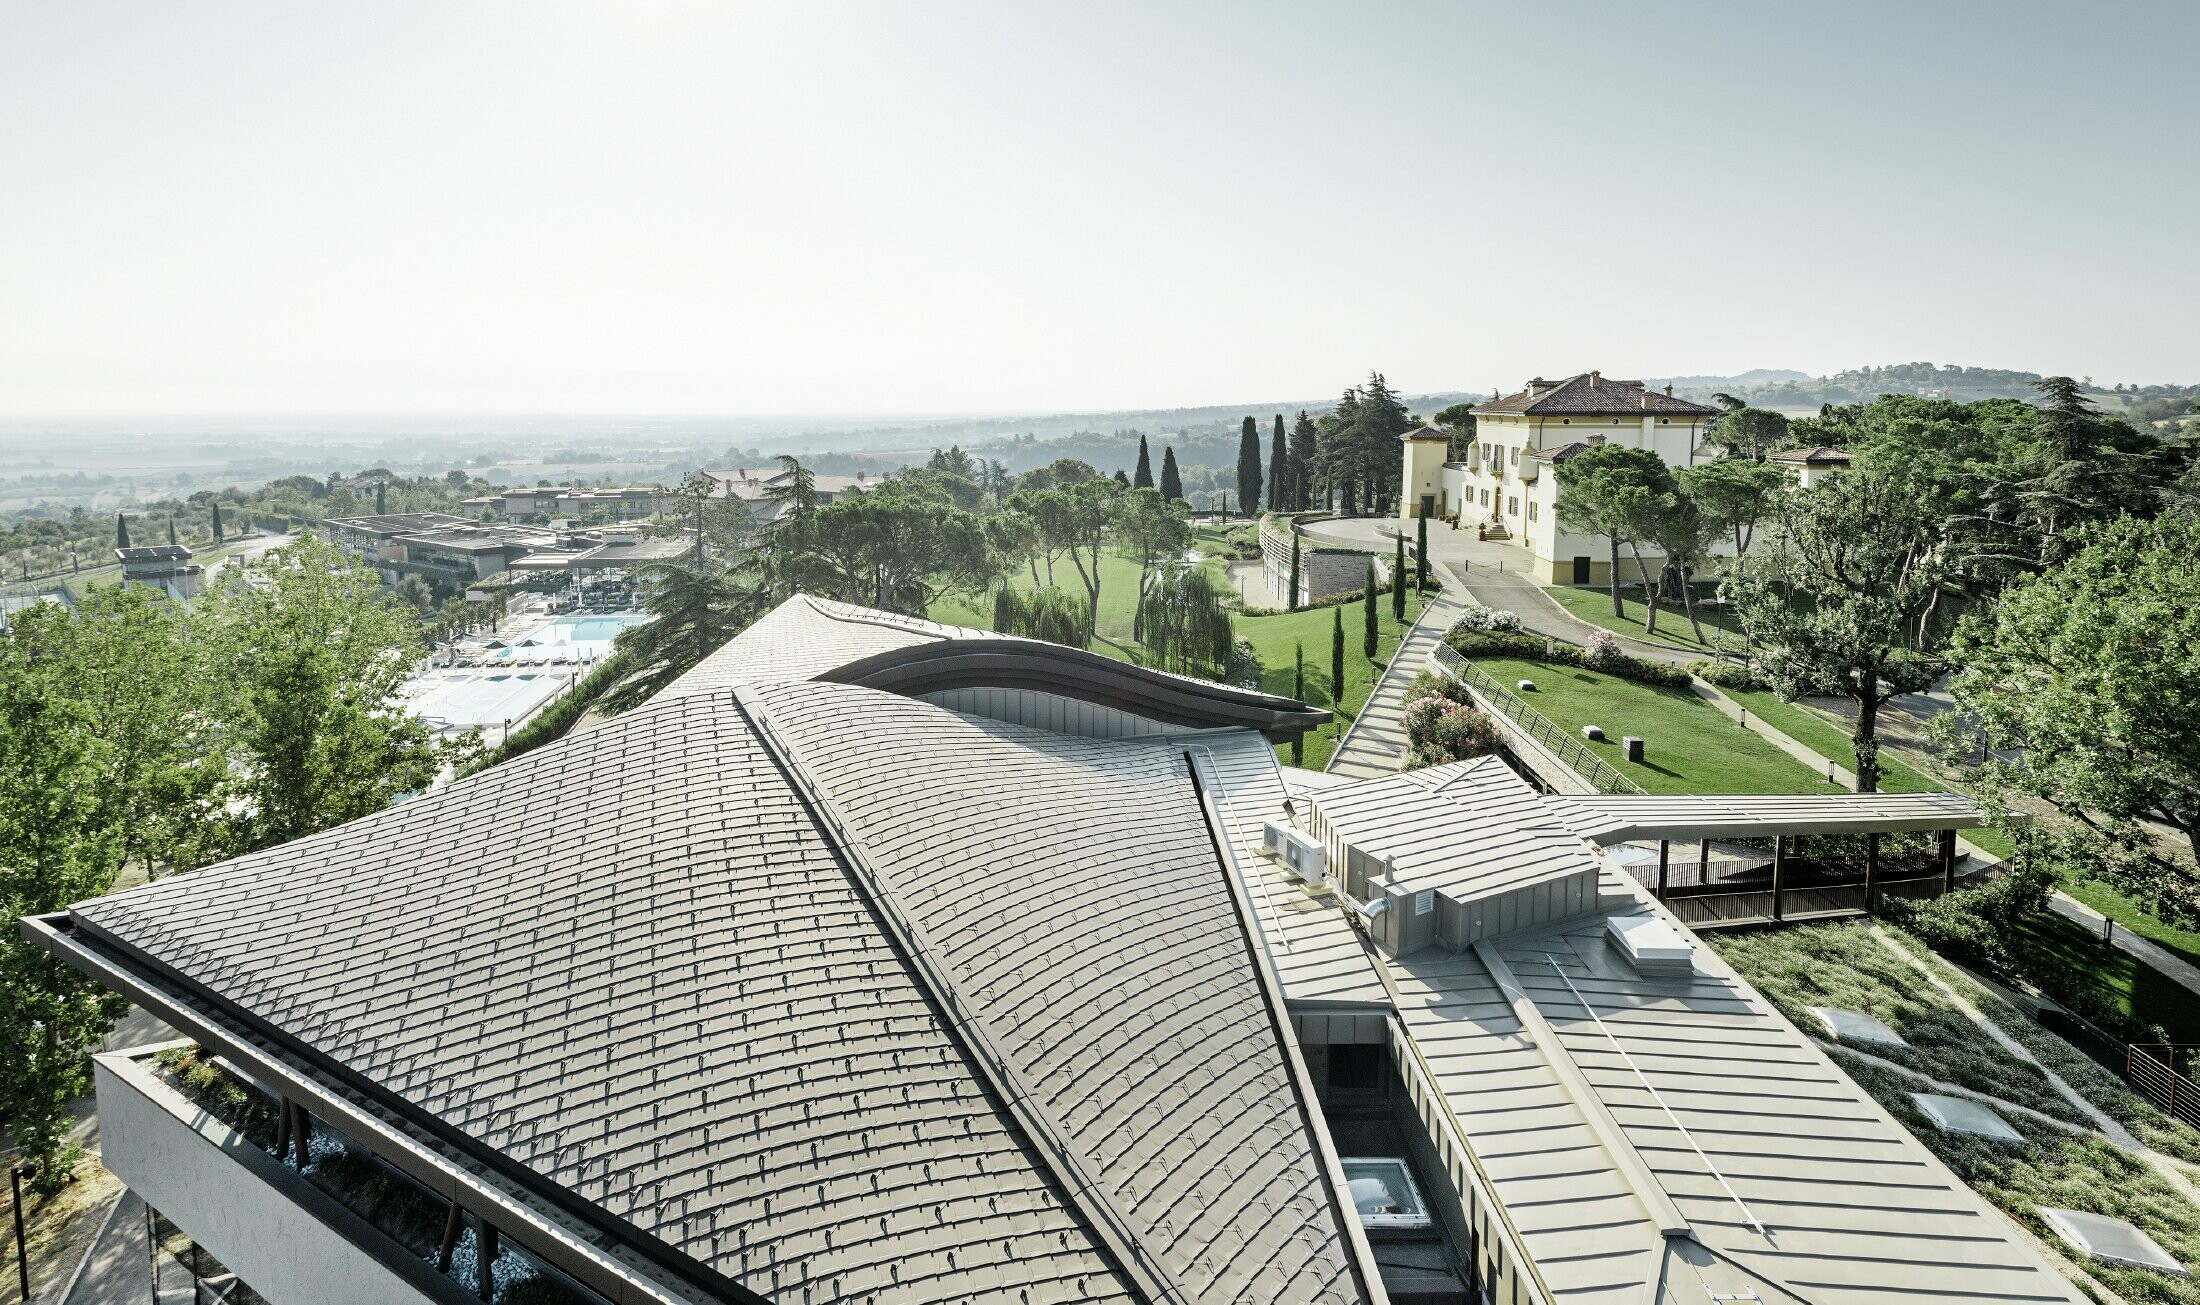 Palazzo di Varignana villa (Italy) golf resort with a sweeping PREFA aluminium roof in brown